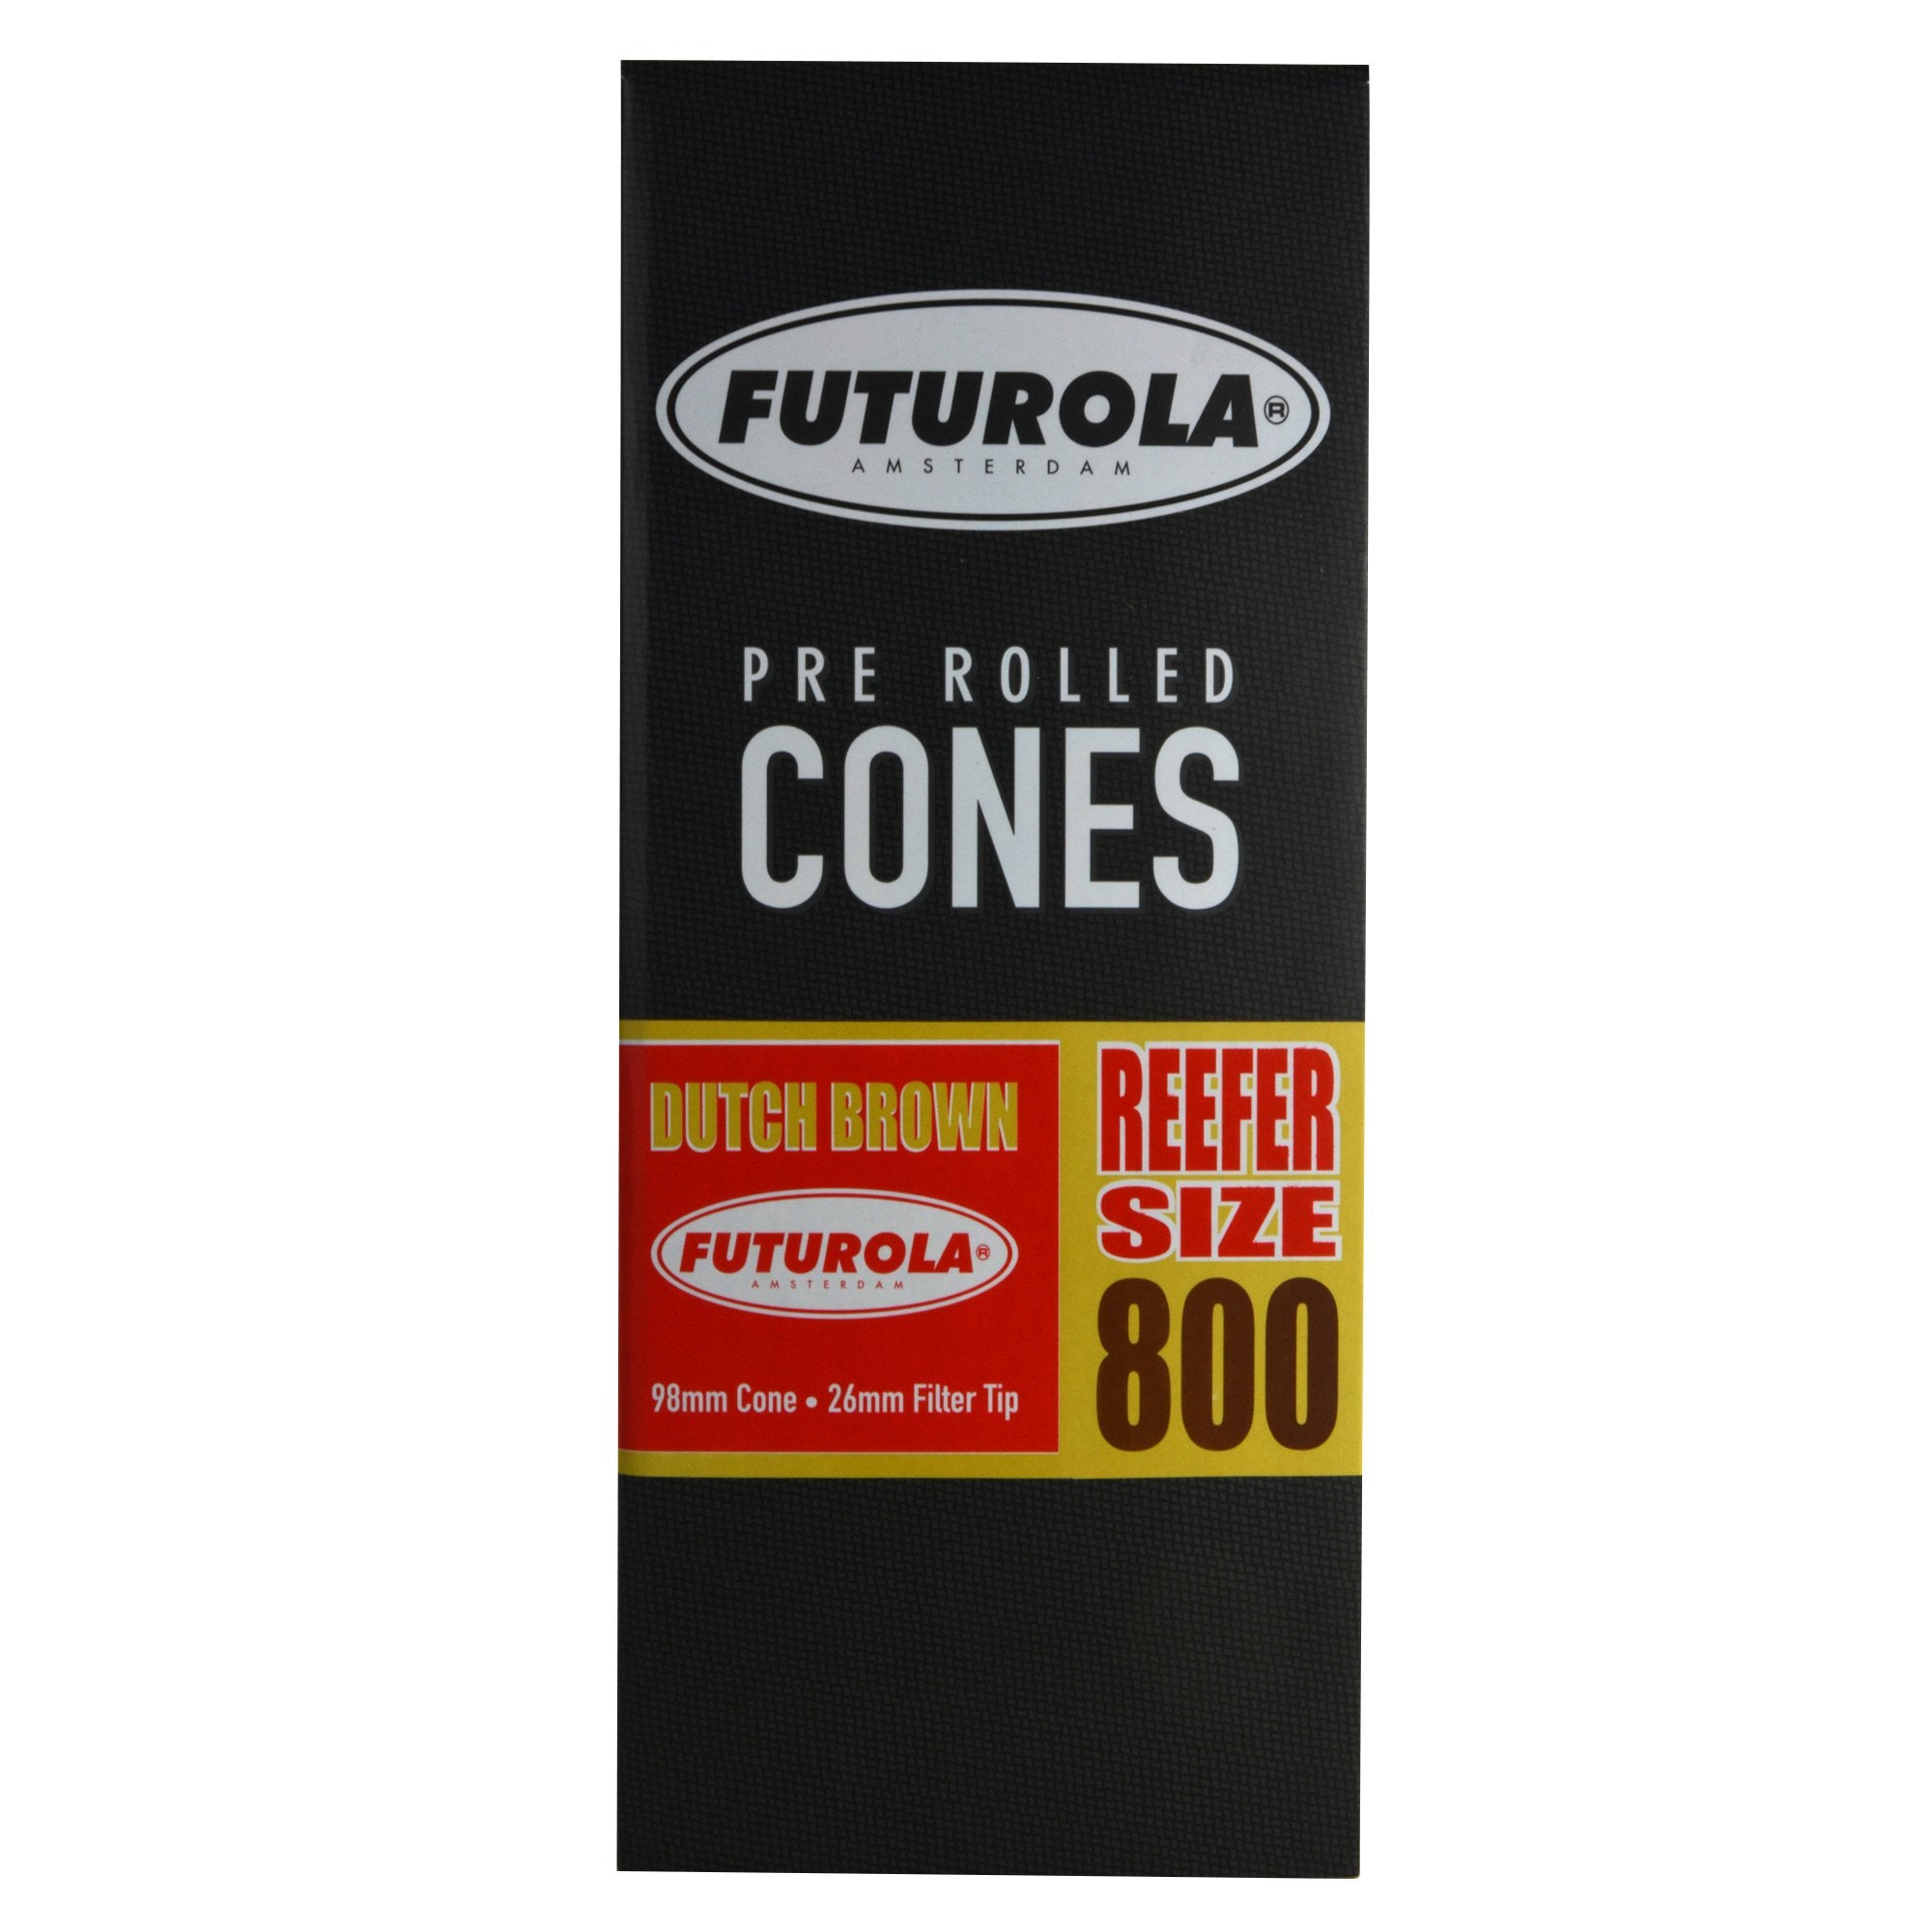 FUTUROLA | Reefer Size Pre-Rolled Cones | 98mm - Dutch Brown Paper - 800 Count - 2